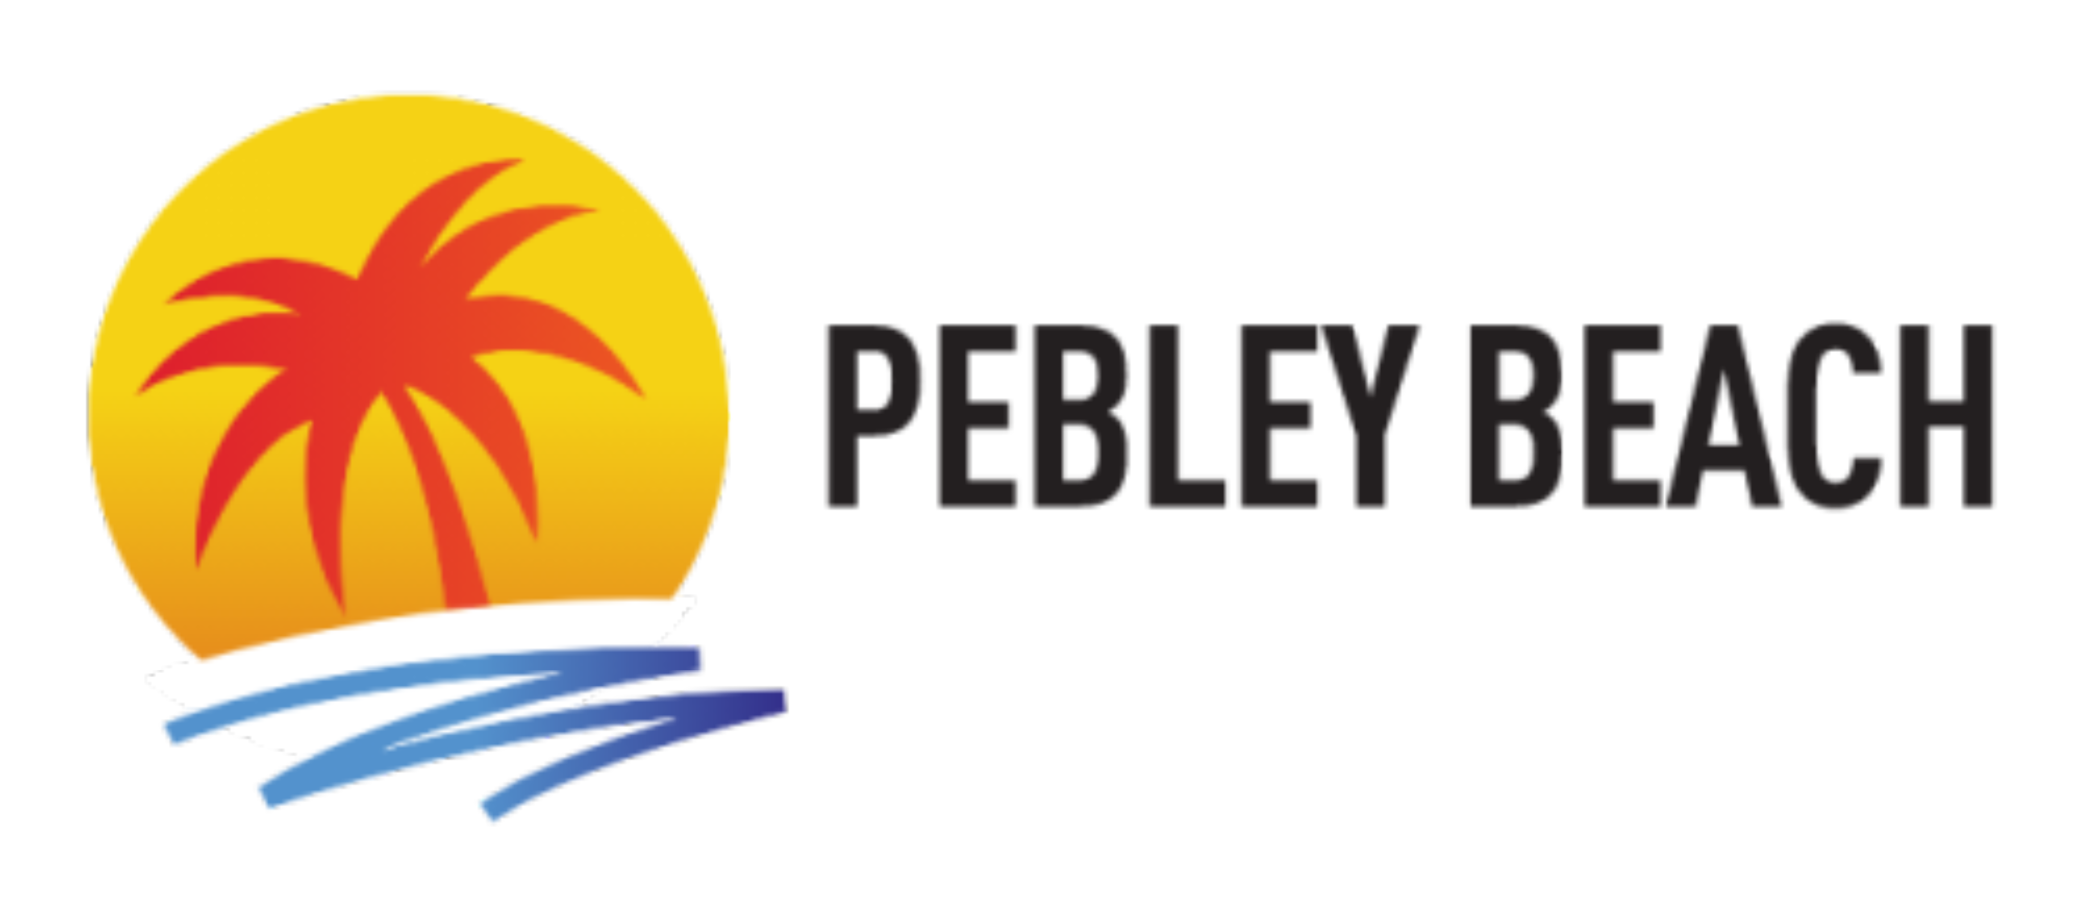 Pebley Beach Logo